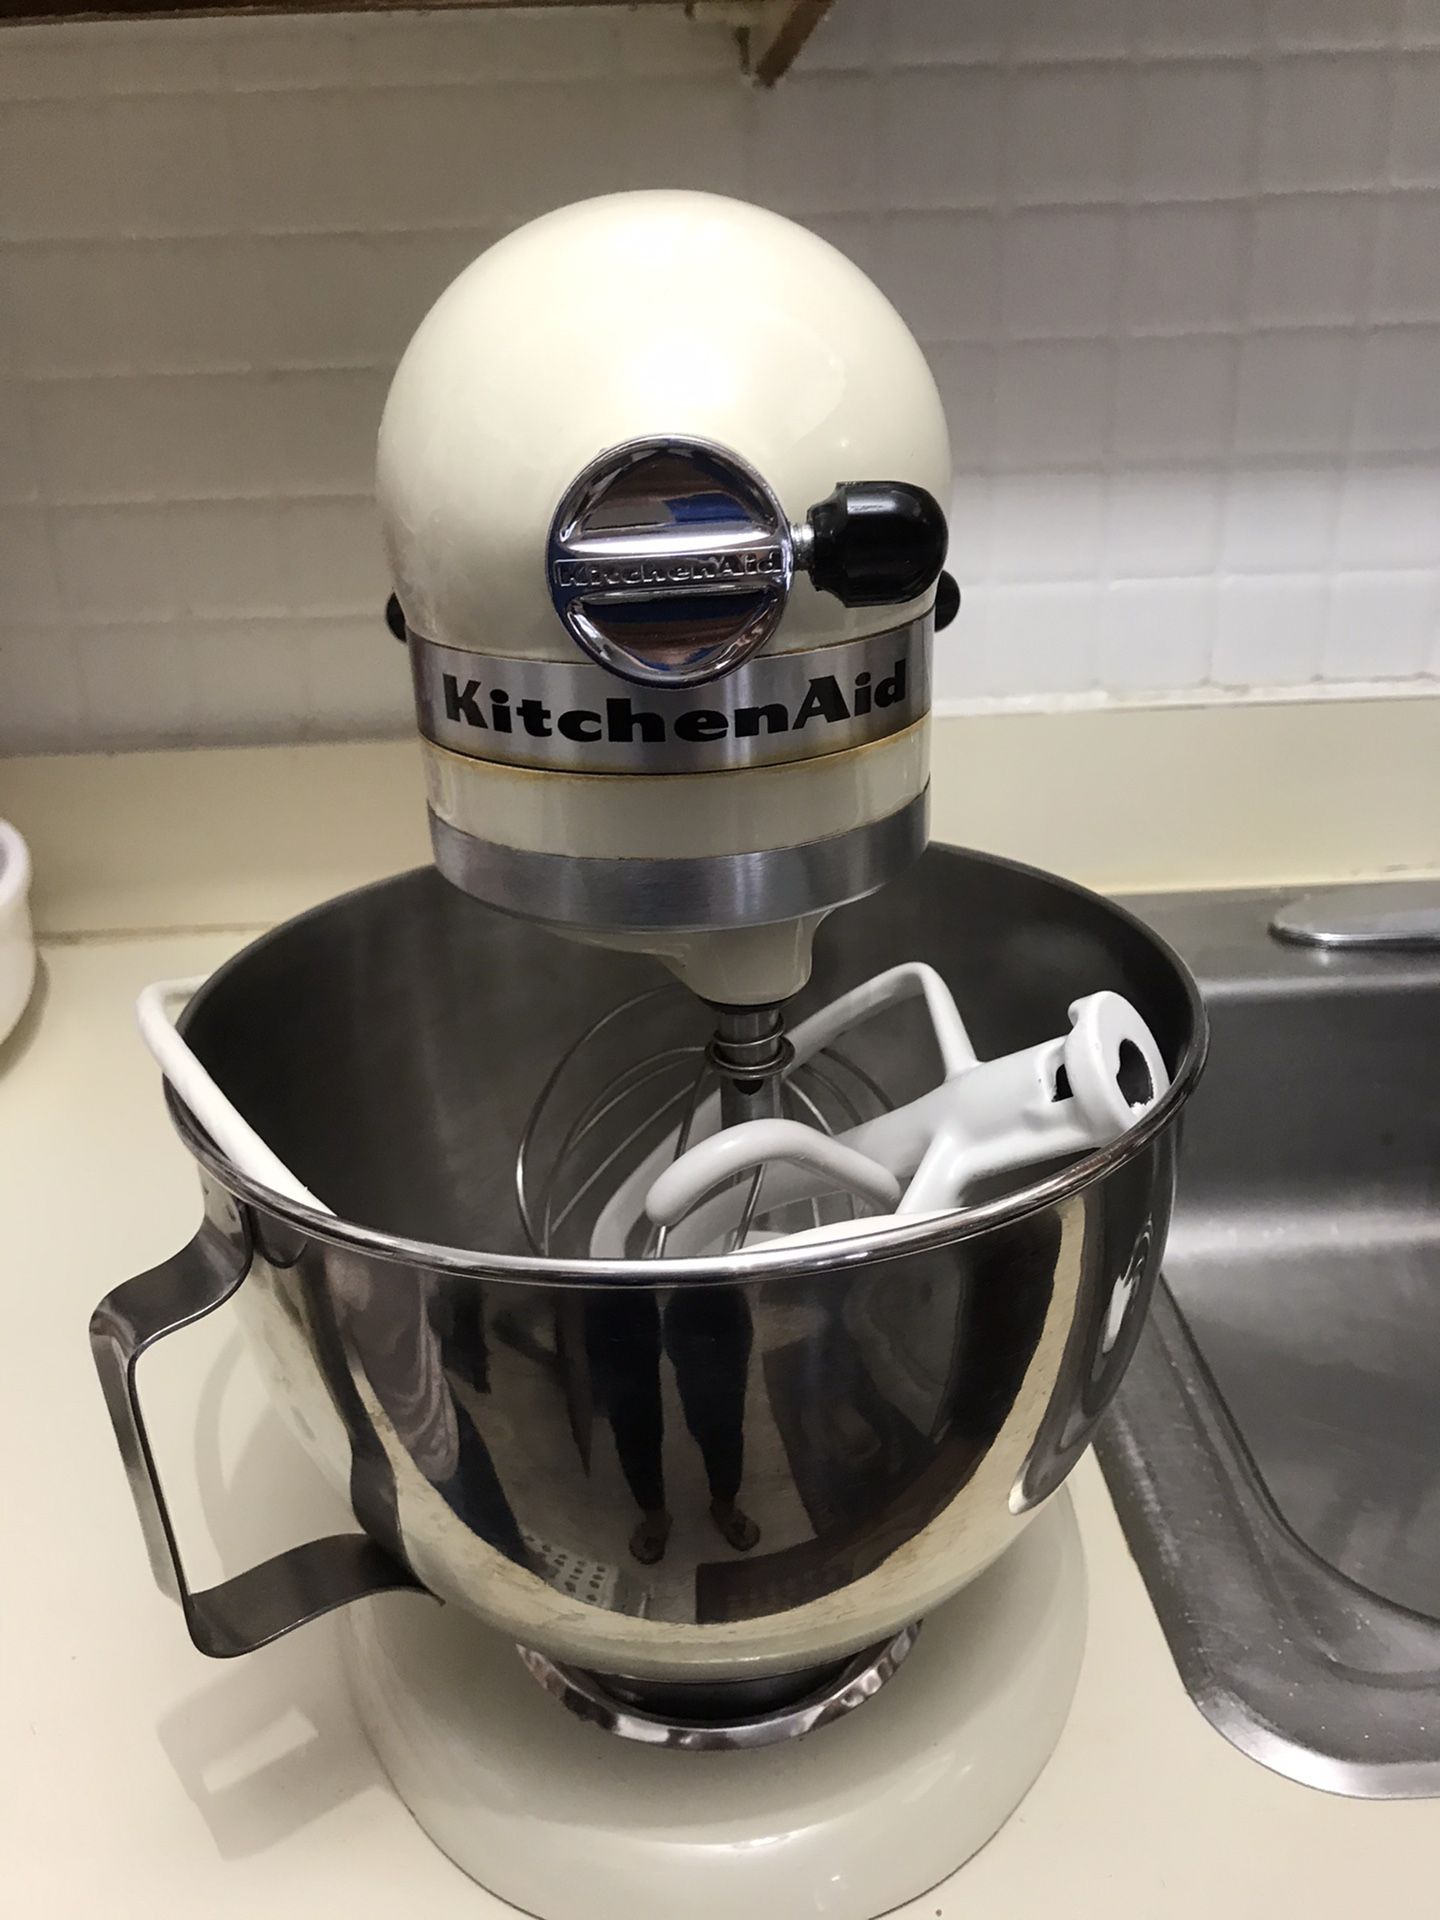 KitchenAiD mixer